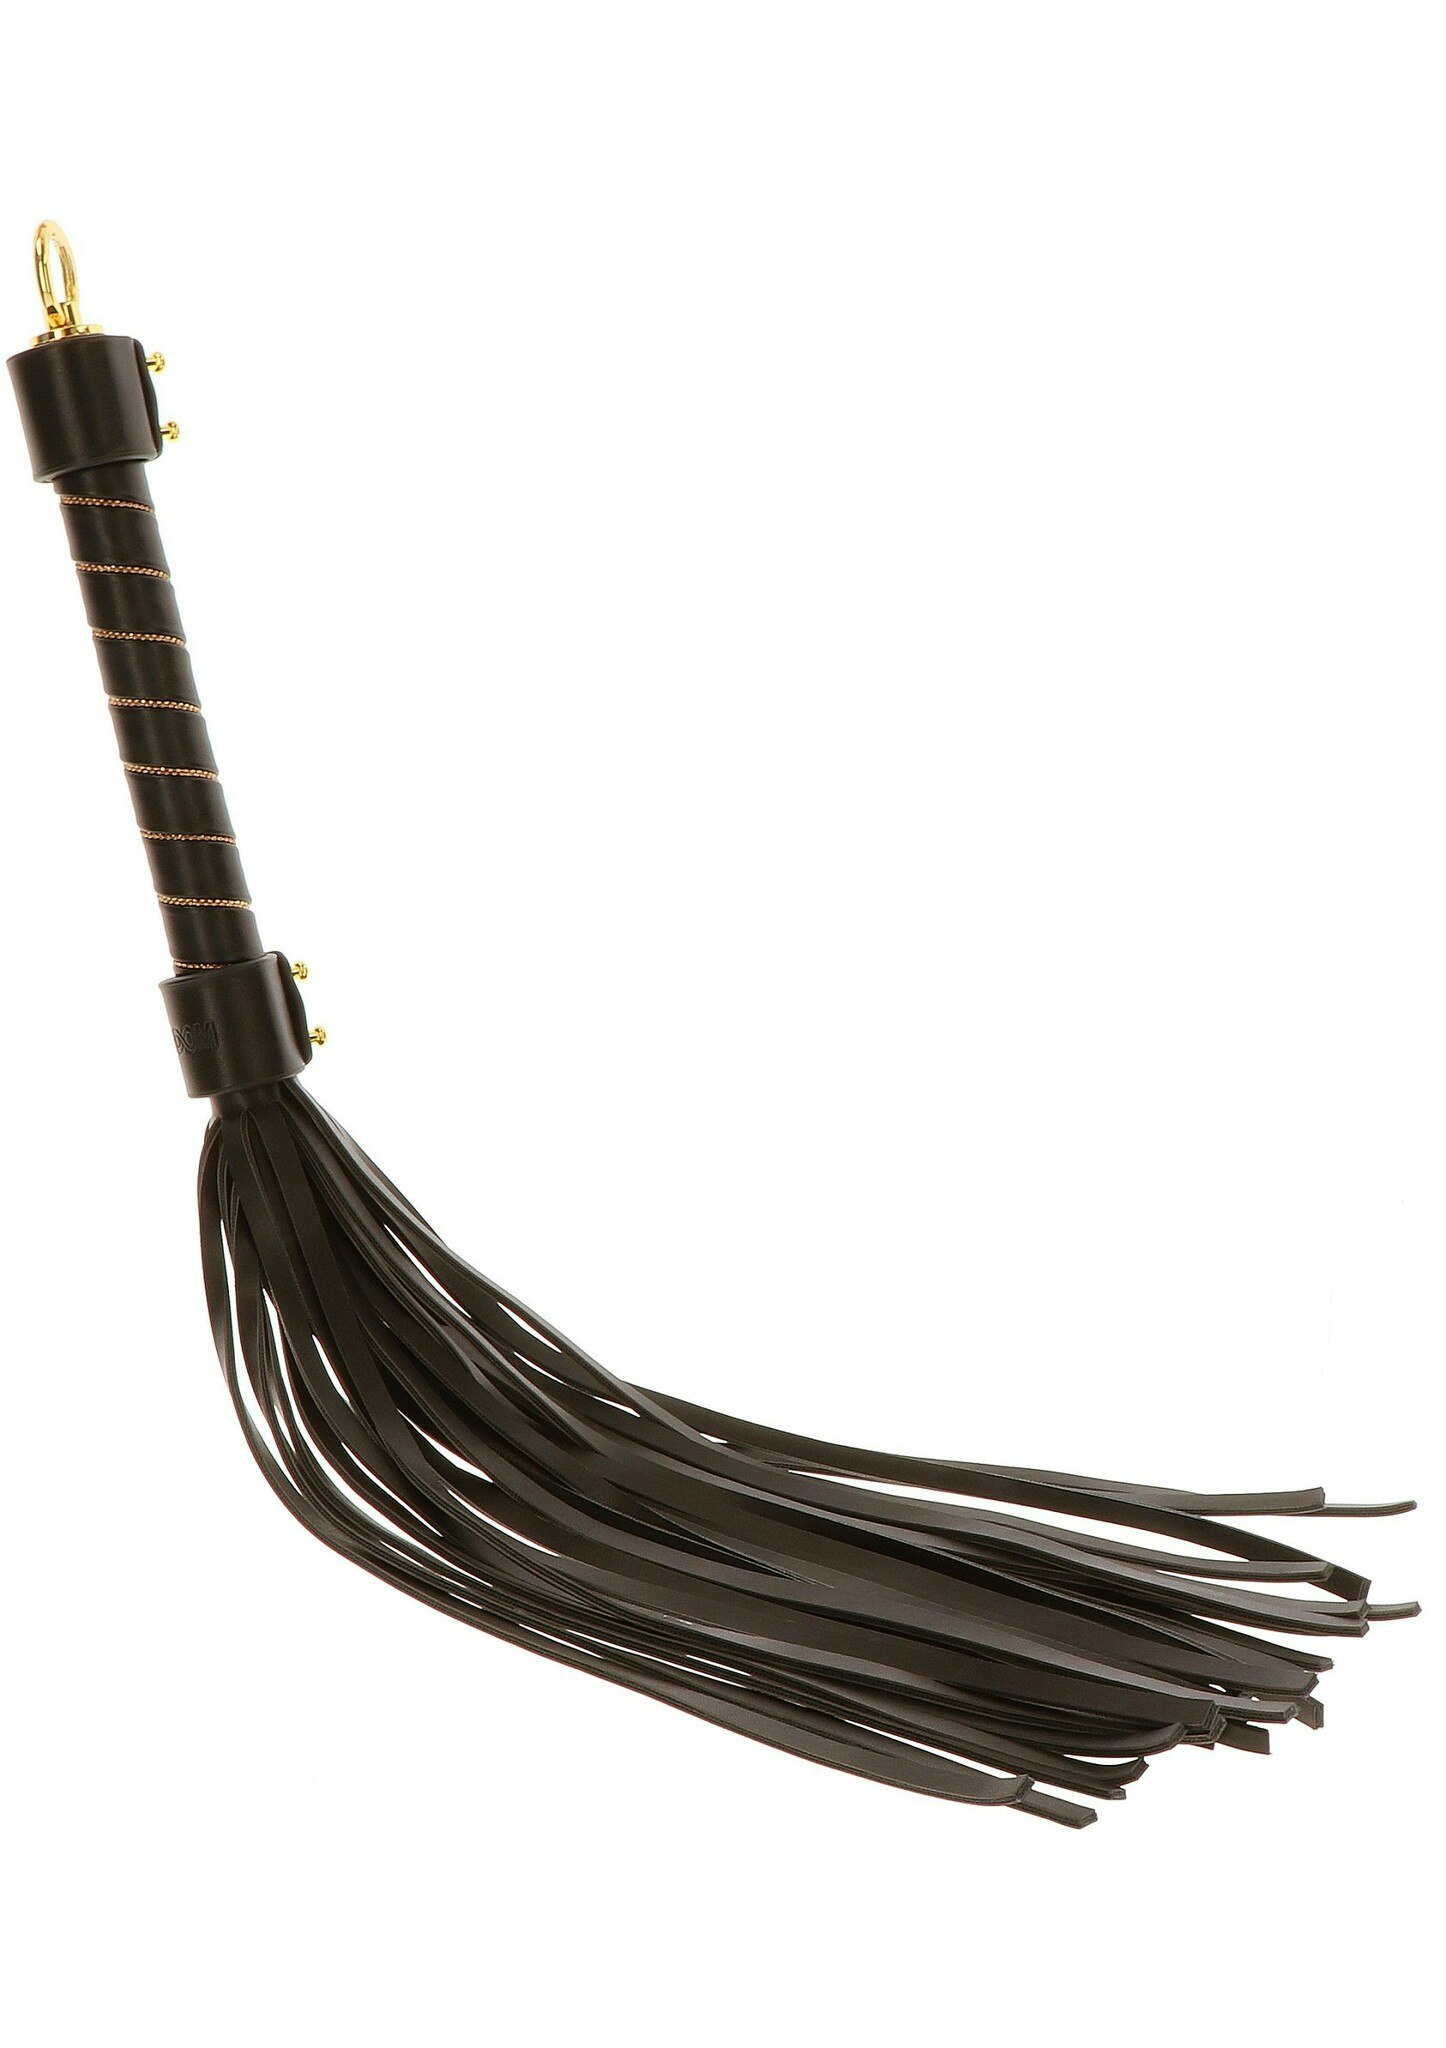 TABOOM - Studded Whip, Black & Gold